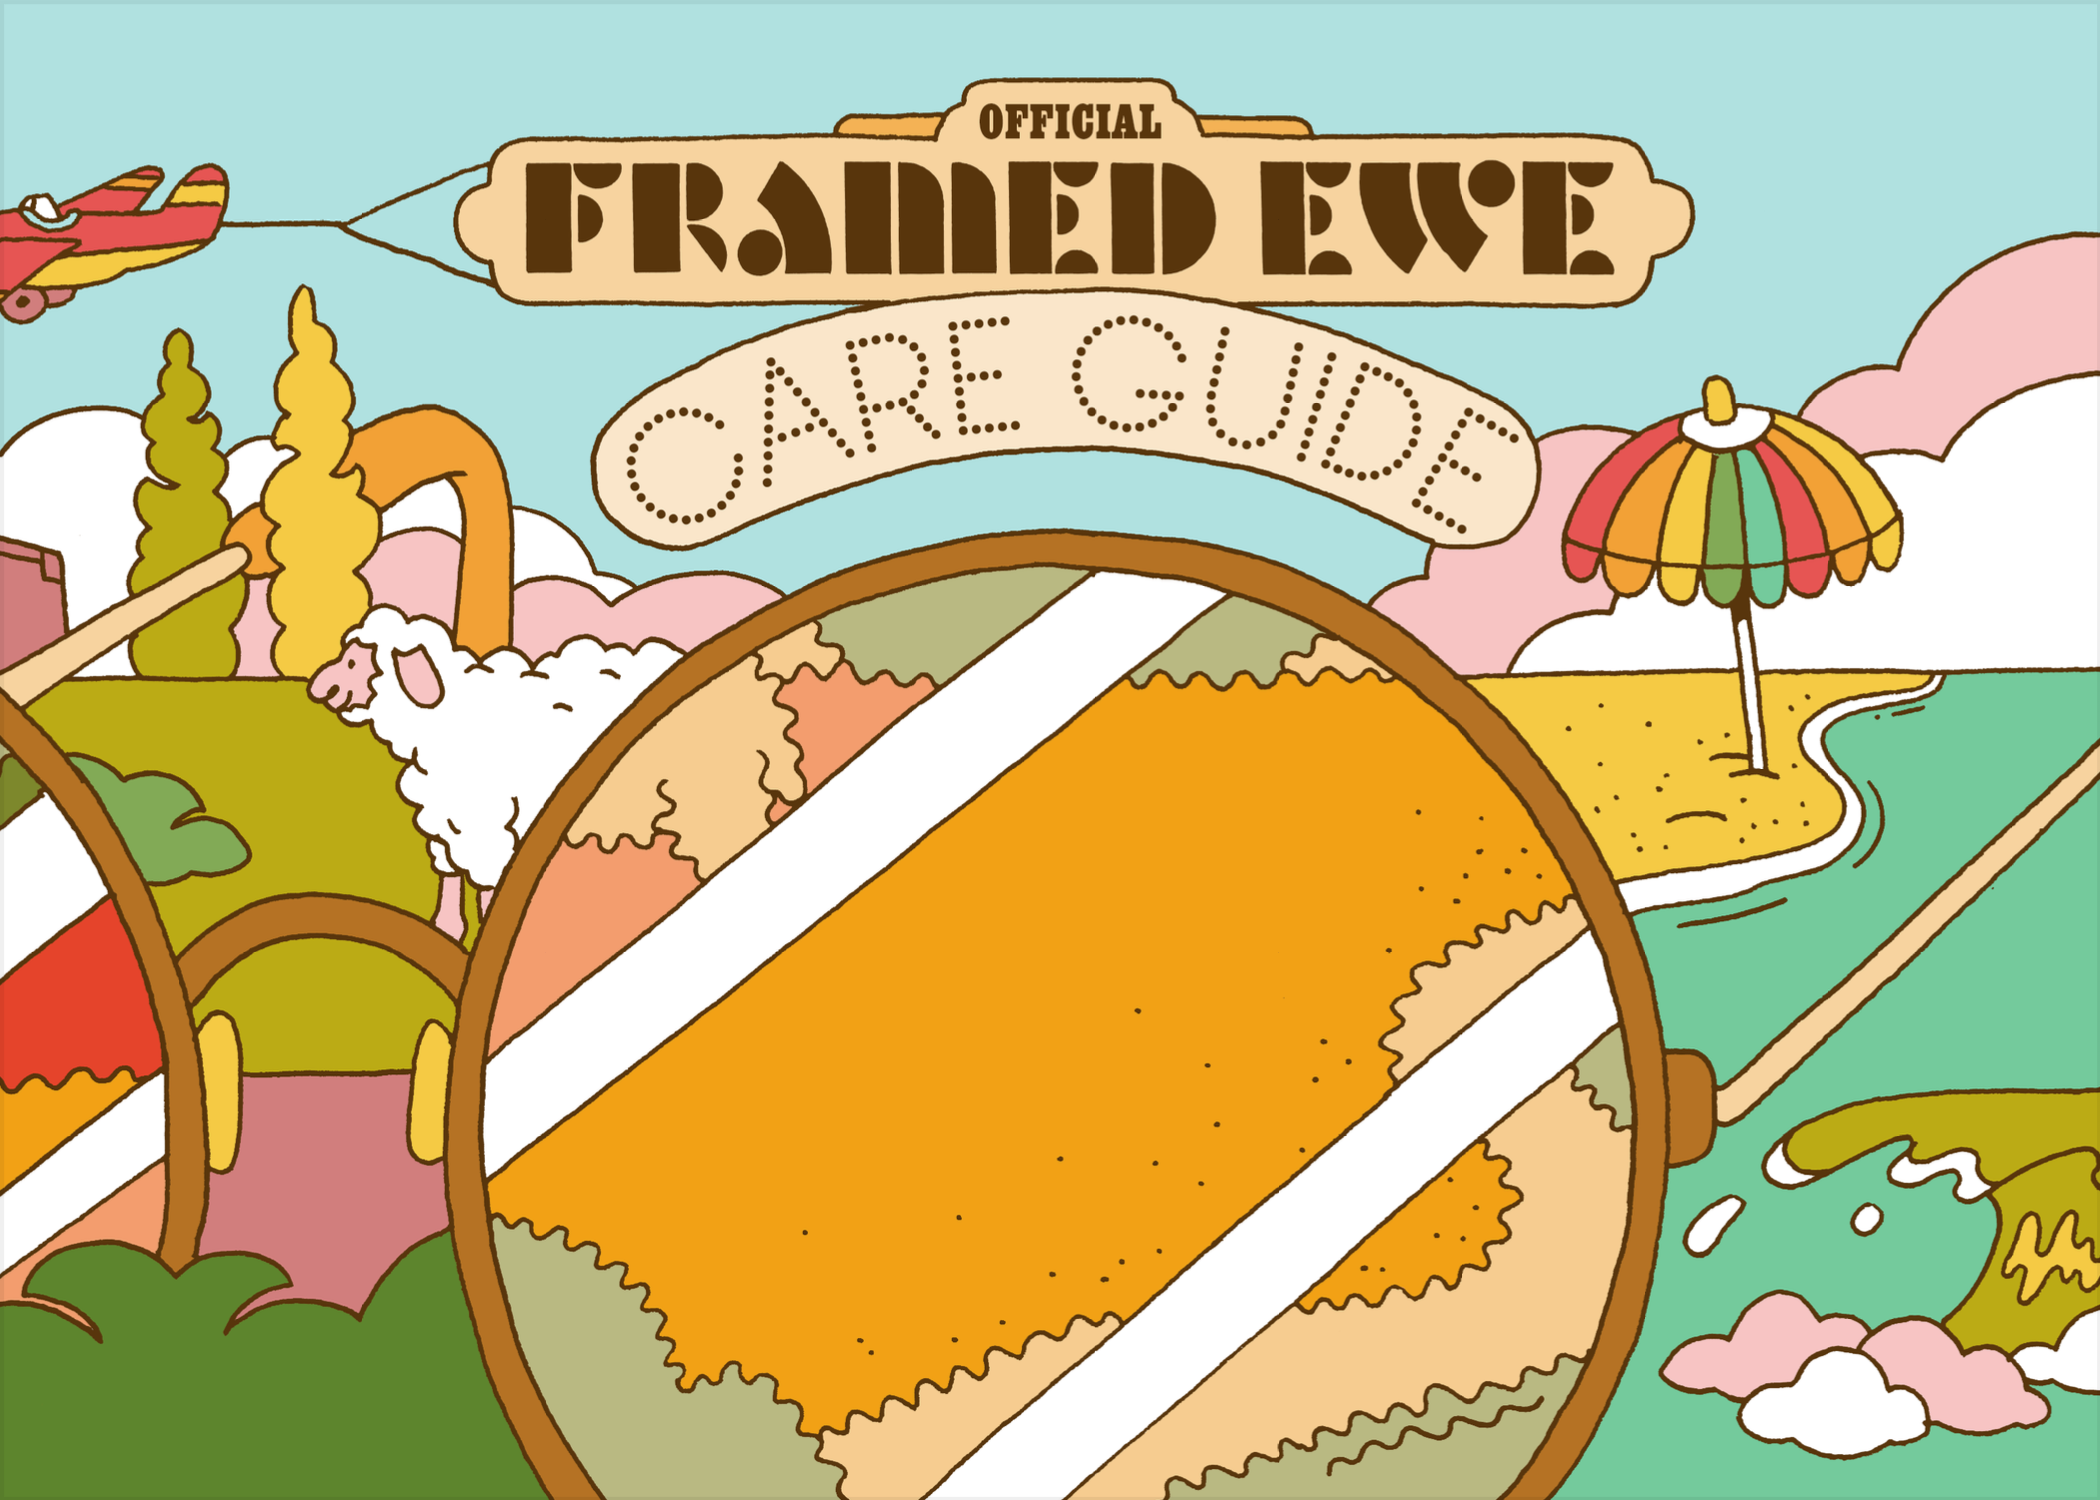 Framed_Ewe_Care-Guide_1.png